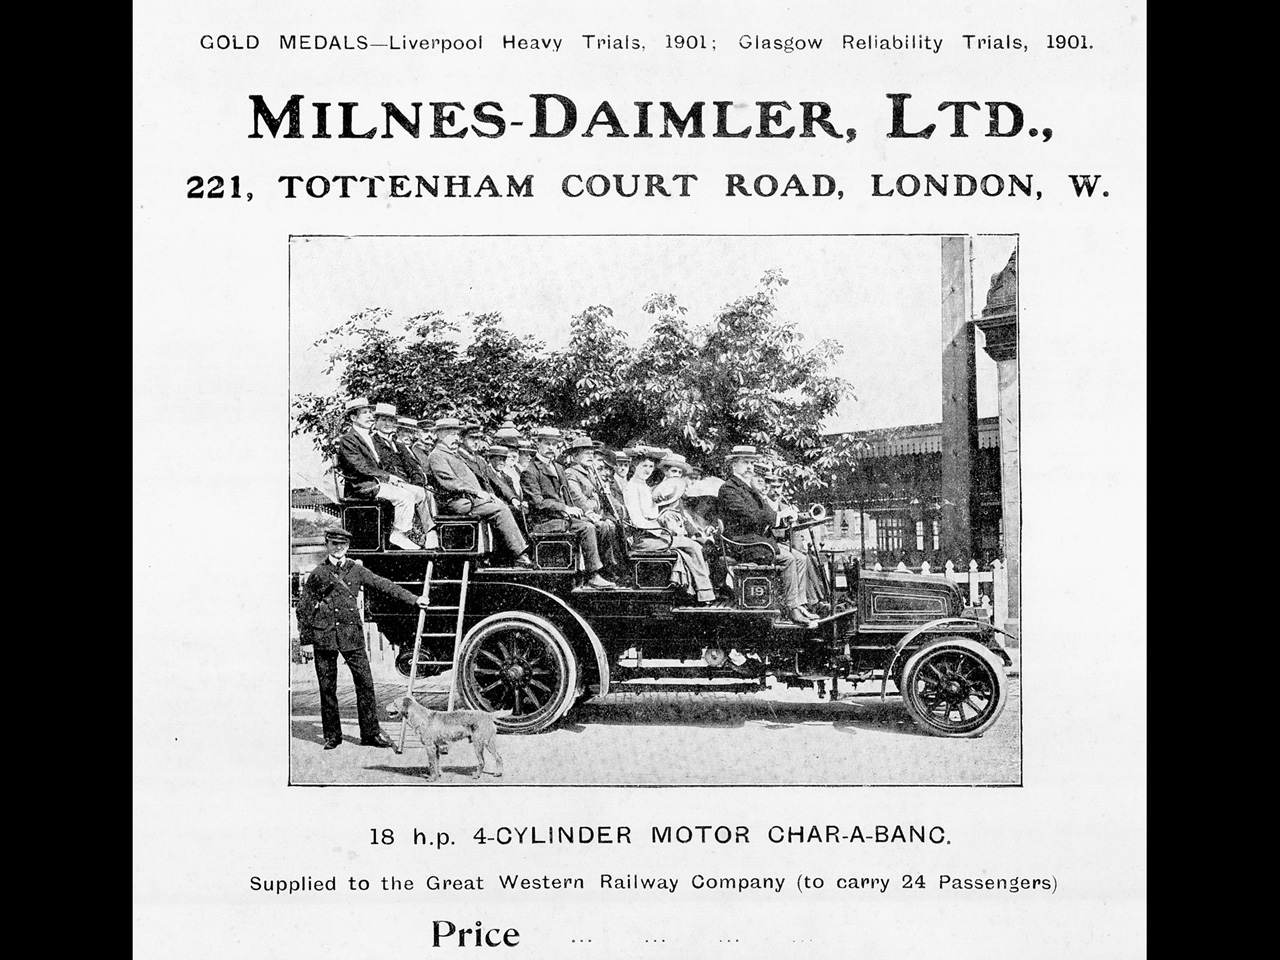 Vintage Daimler Advertising Materials